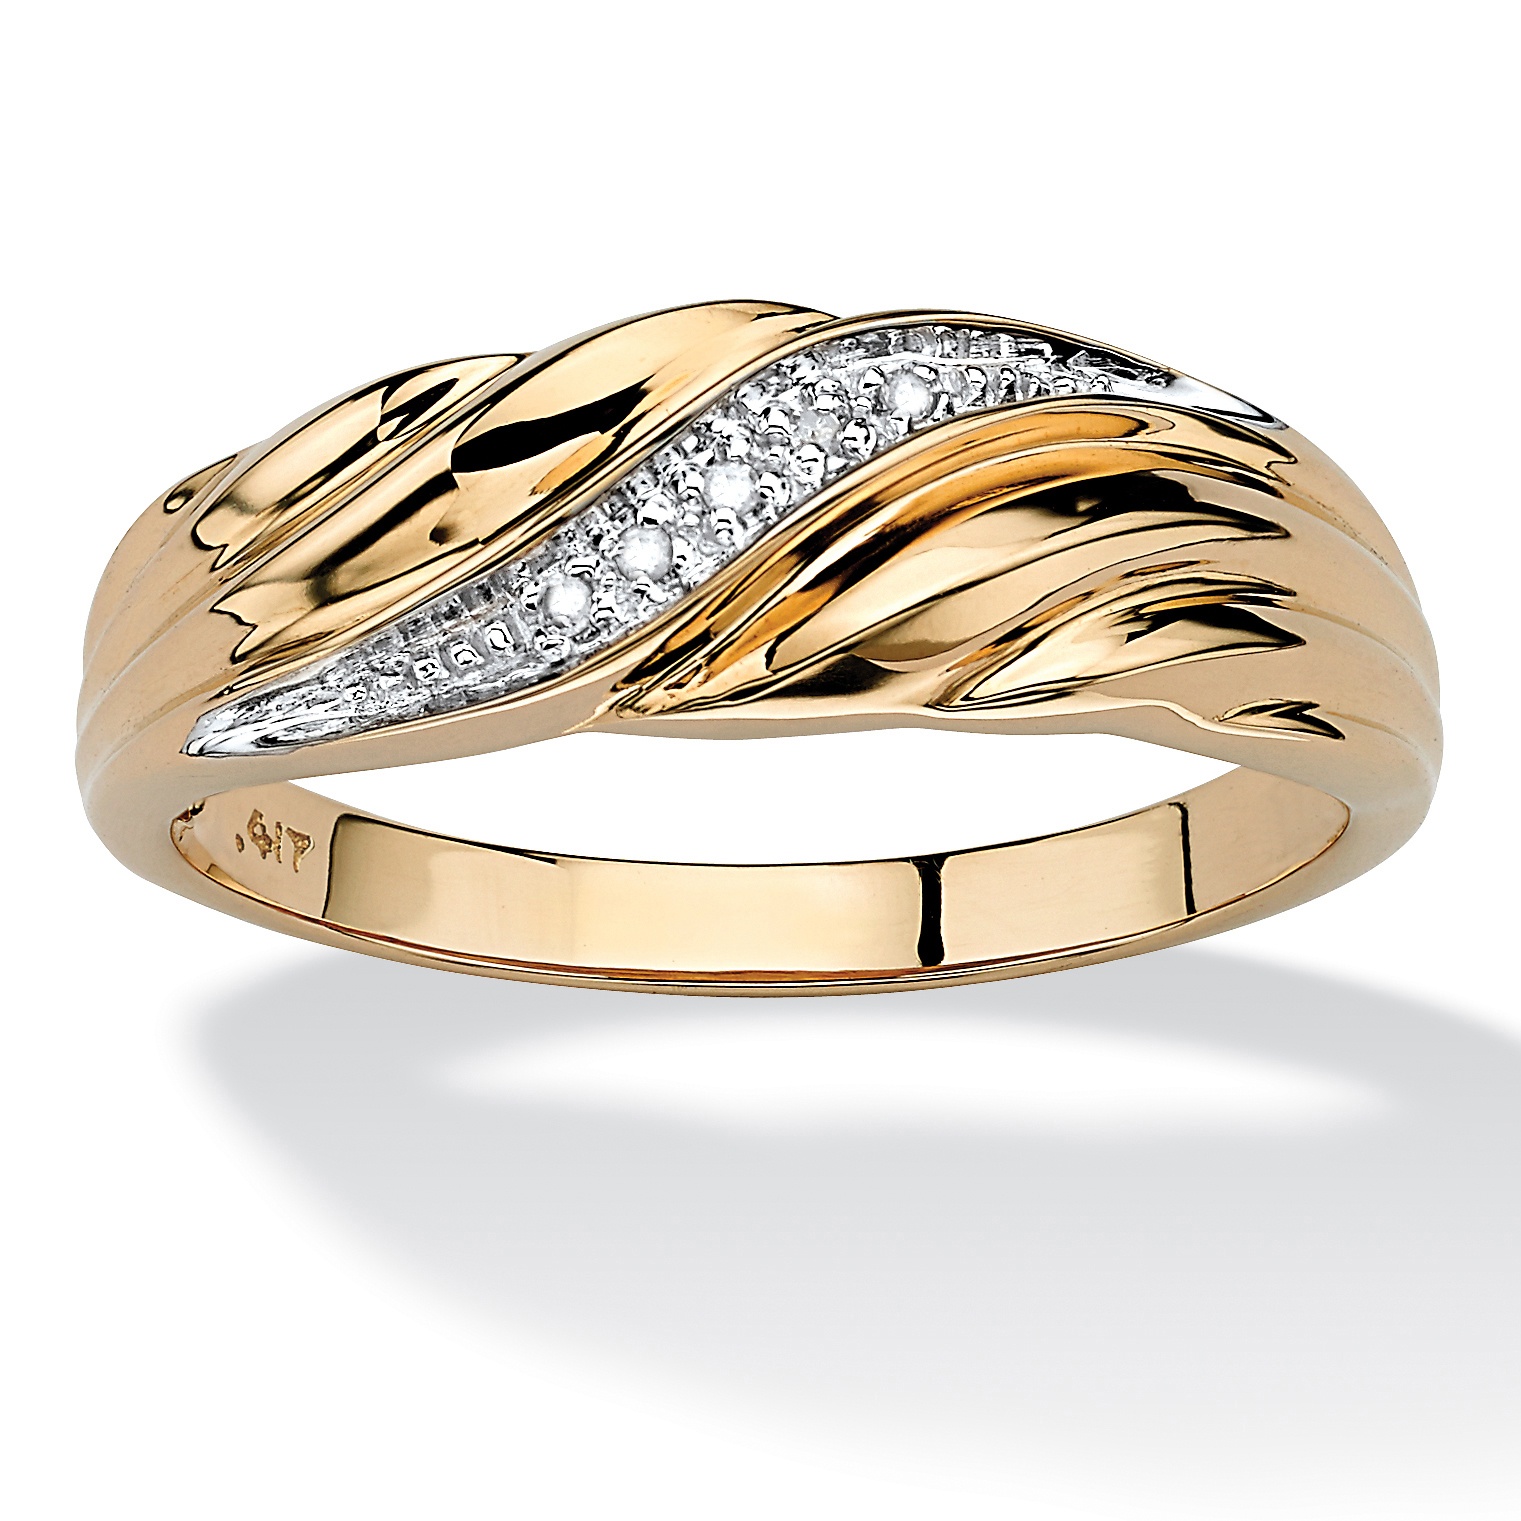 jewelry fashion diamond twisted ring rings gold wedding palmbeach 10k swirled accent band yellow shiny unisex rhinestone finger valentine gift